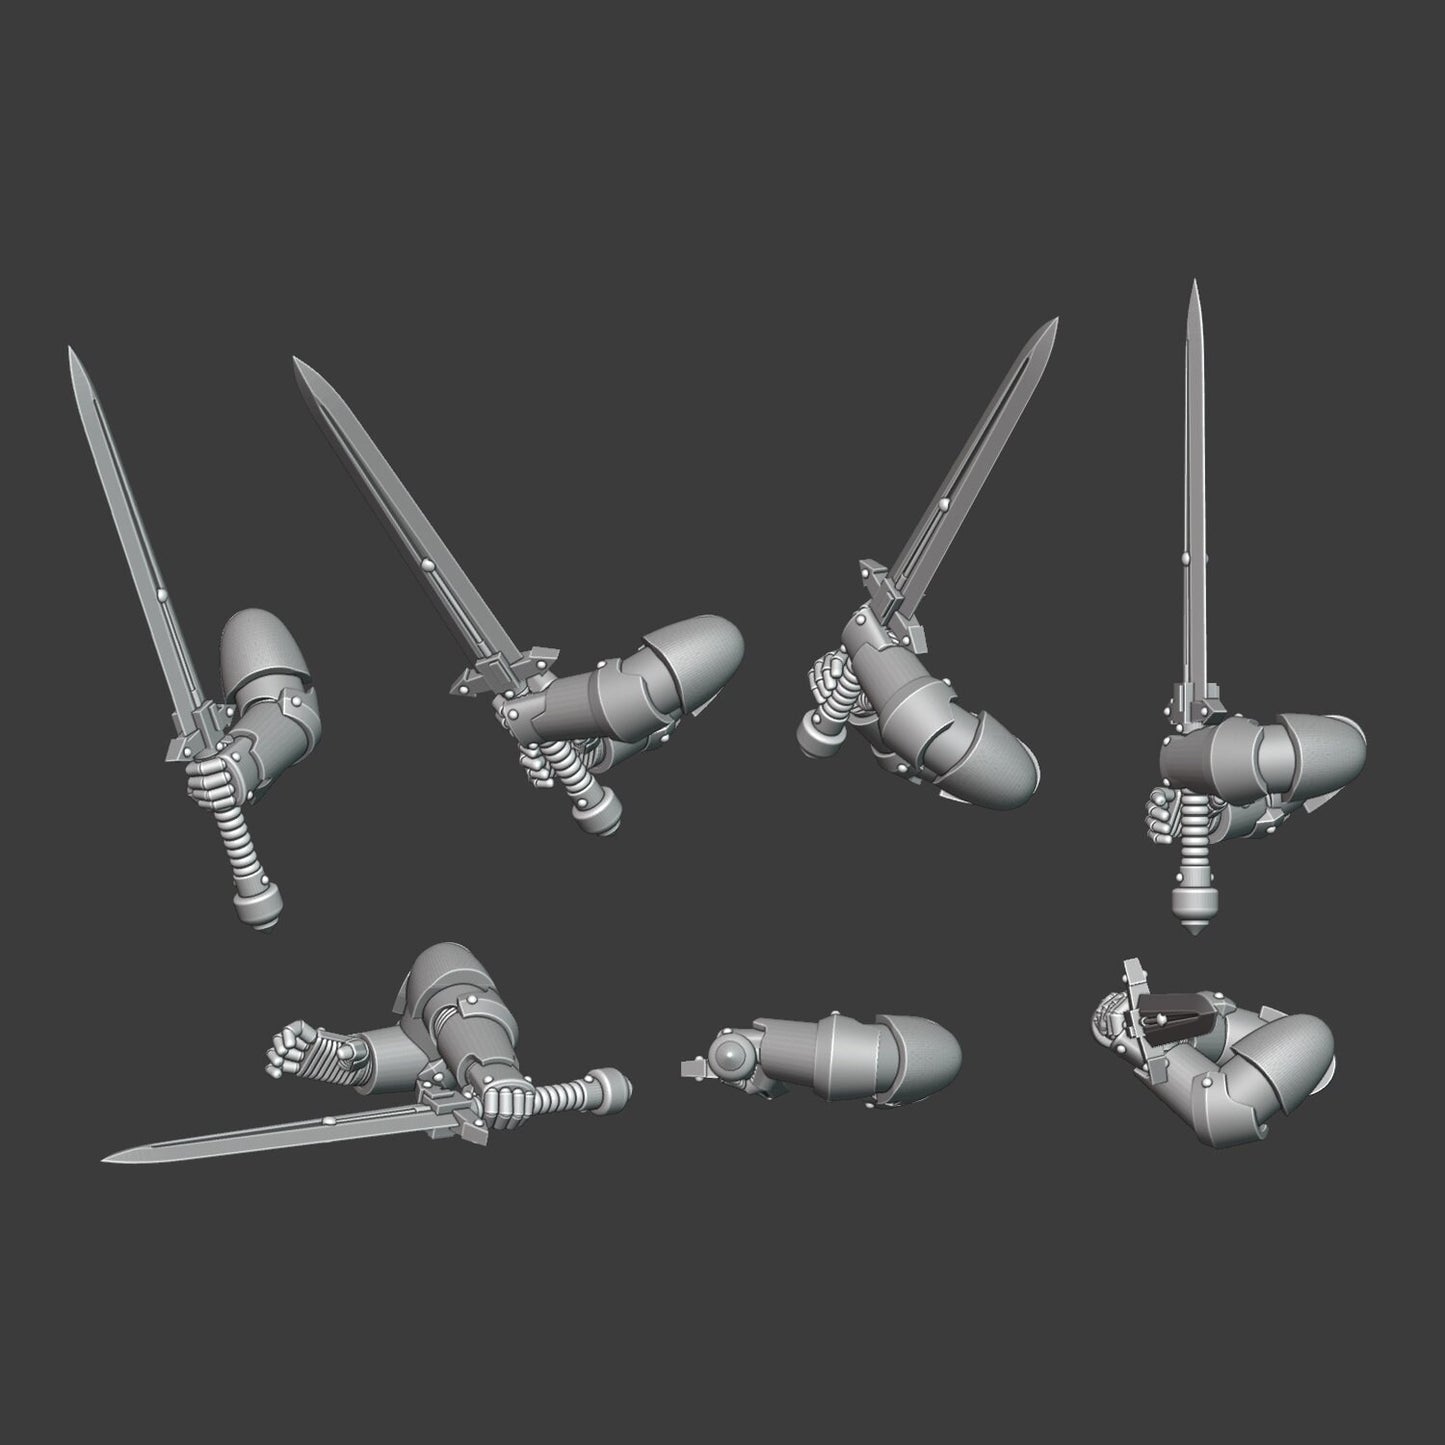 Heresy Gen 4 Great Sword Arm Pairs x10 (Custom Order)